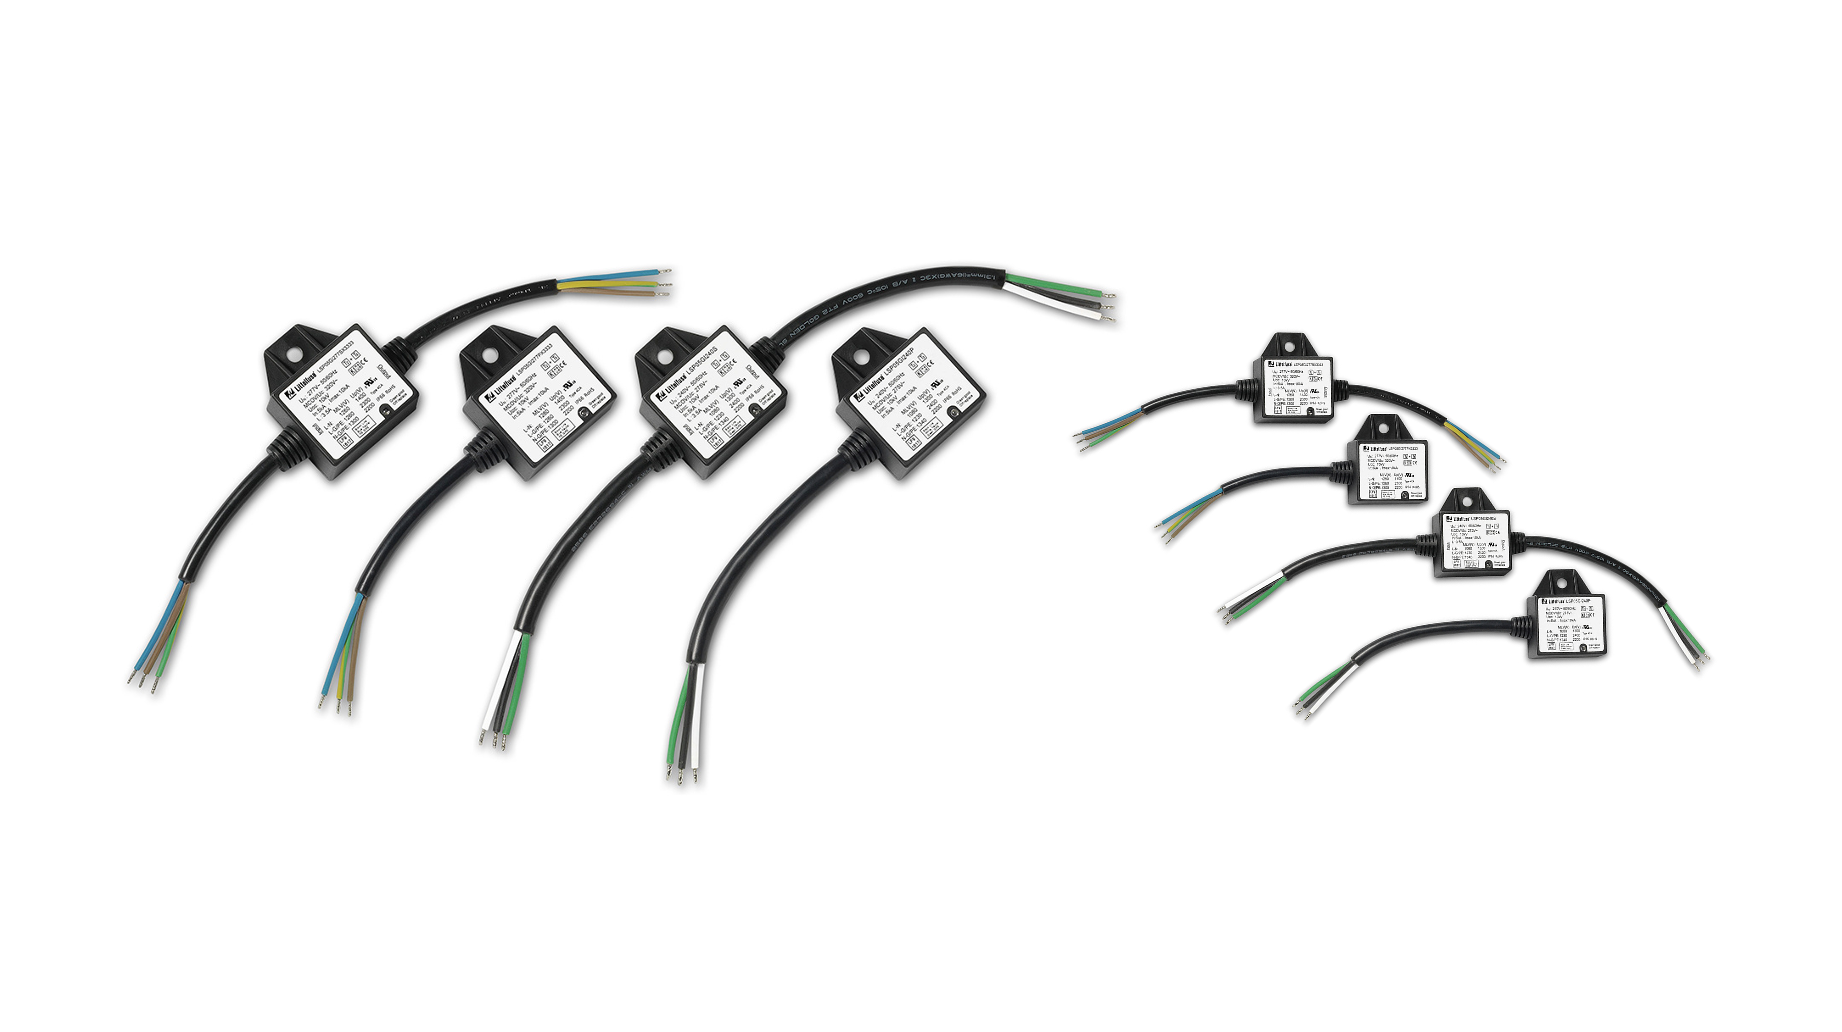 LED Surge Protection Module image, 8 devices